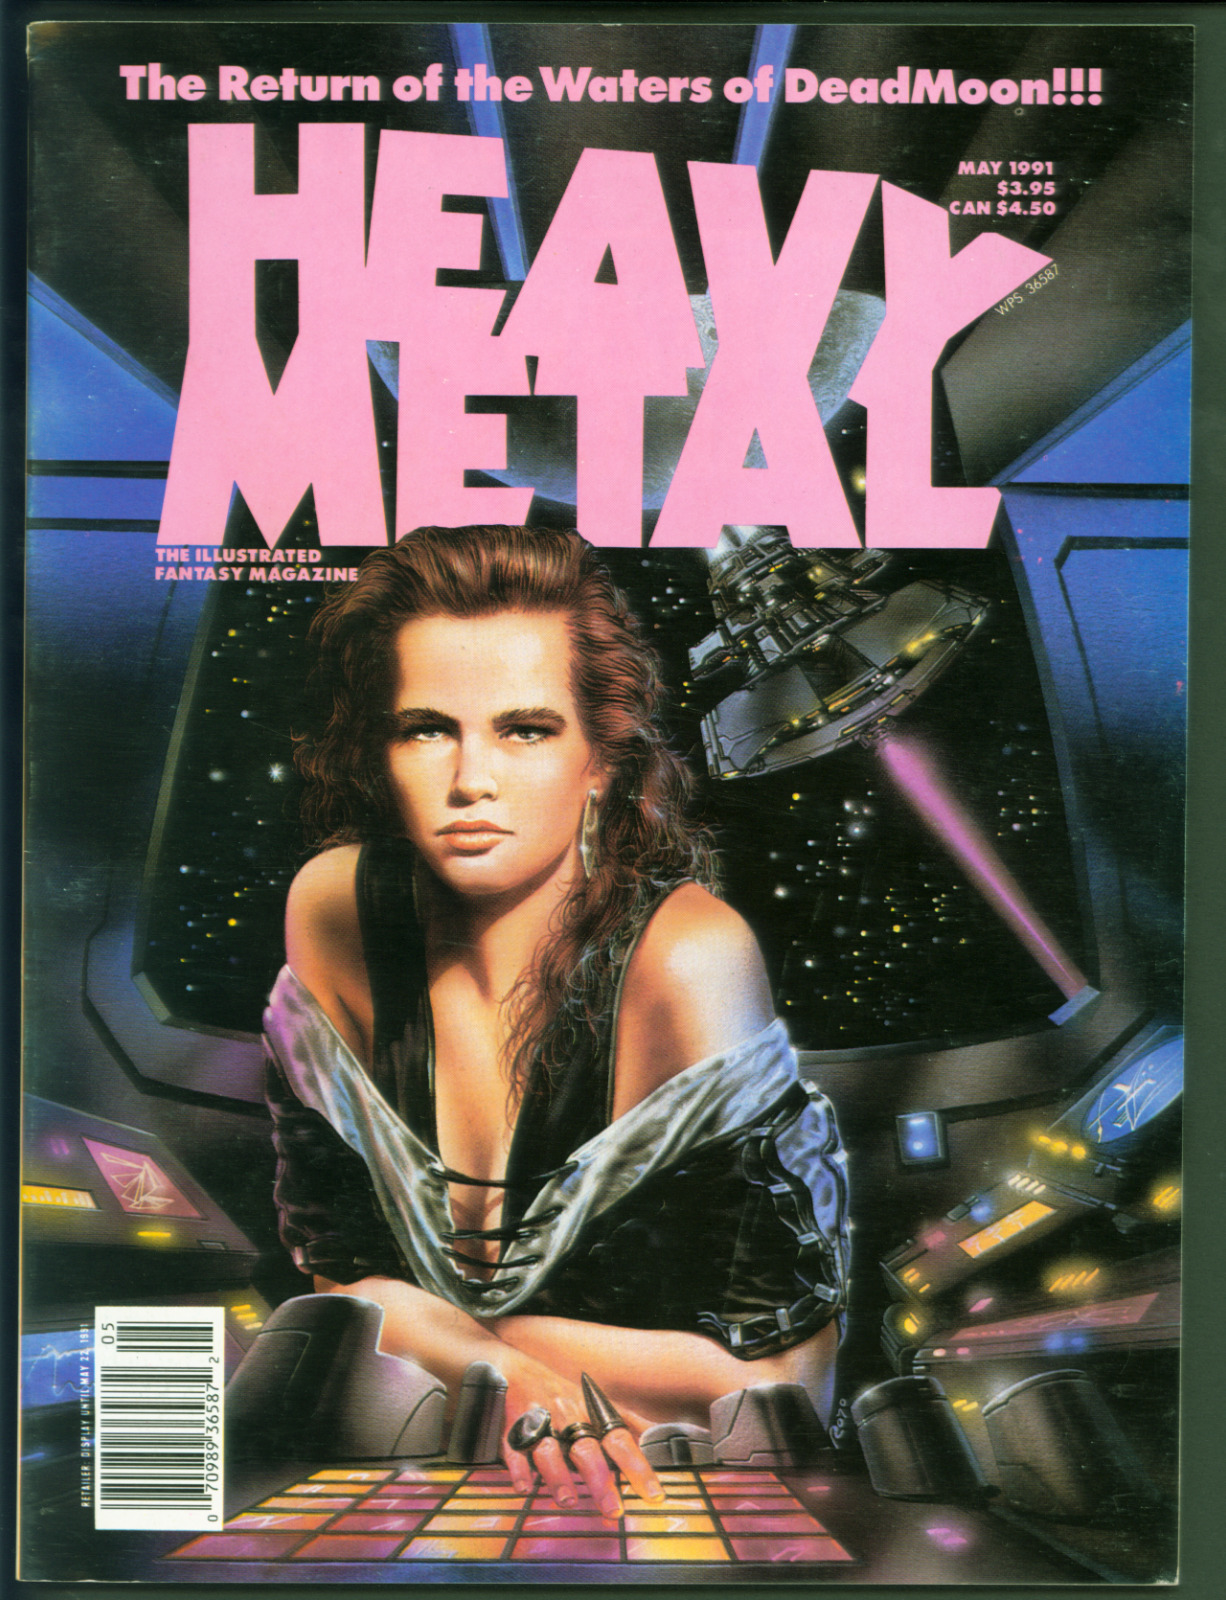 Heavy Metal Magazine May 1991 Luis Royo Cover Art